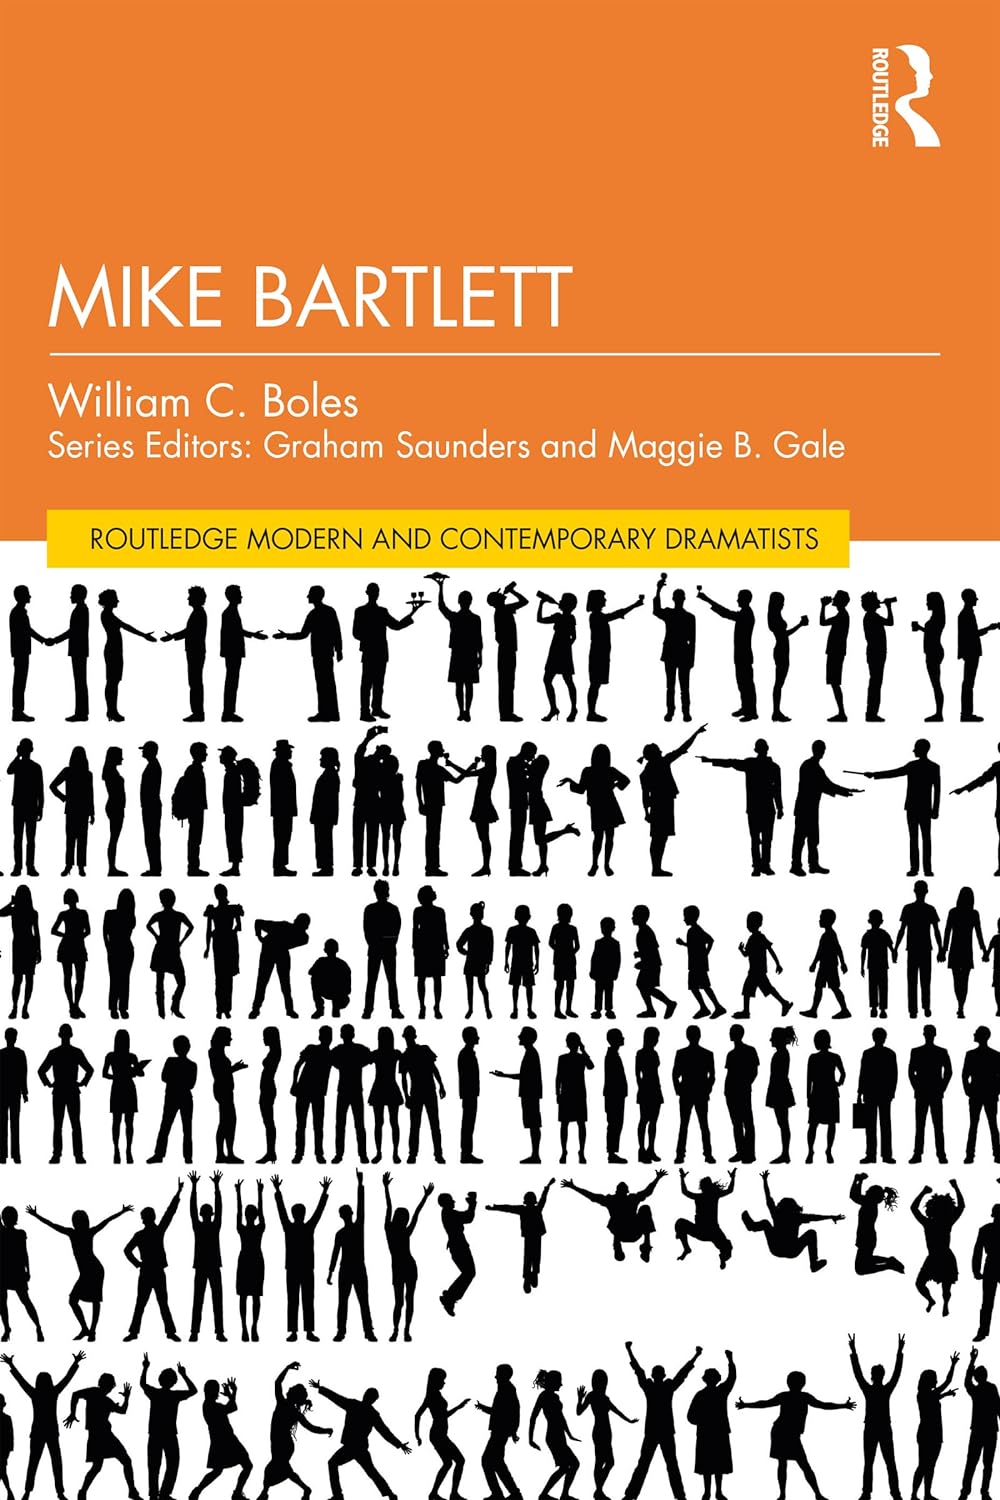 Mike Bartlett by Mike Bartlett